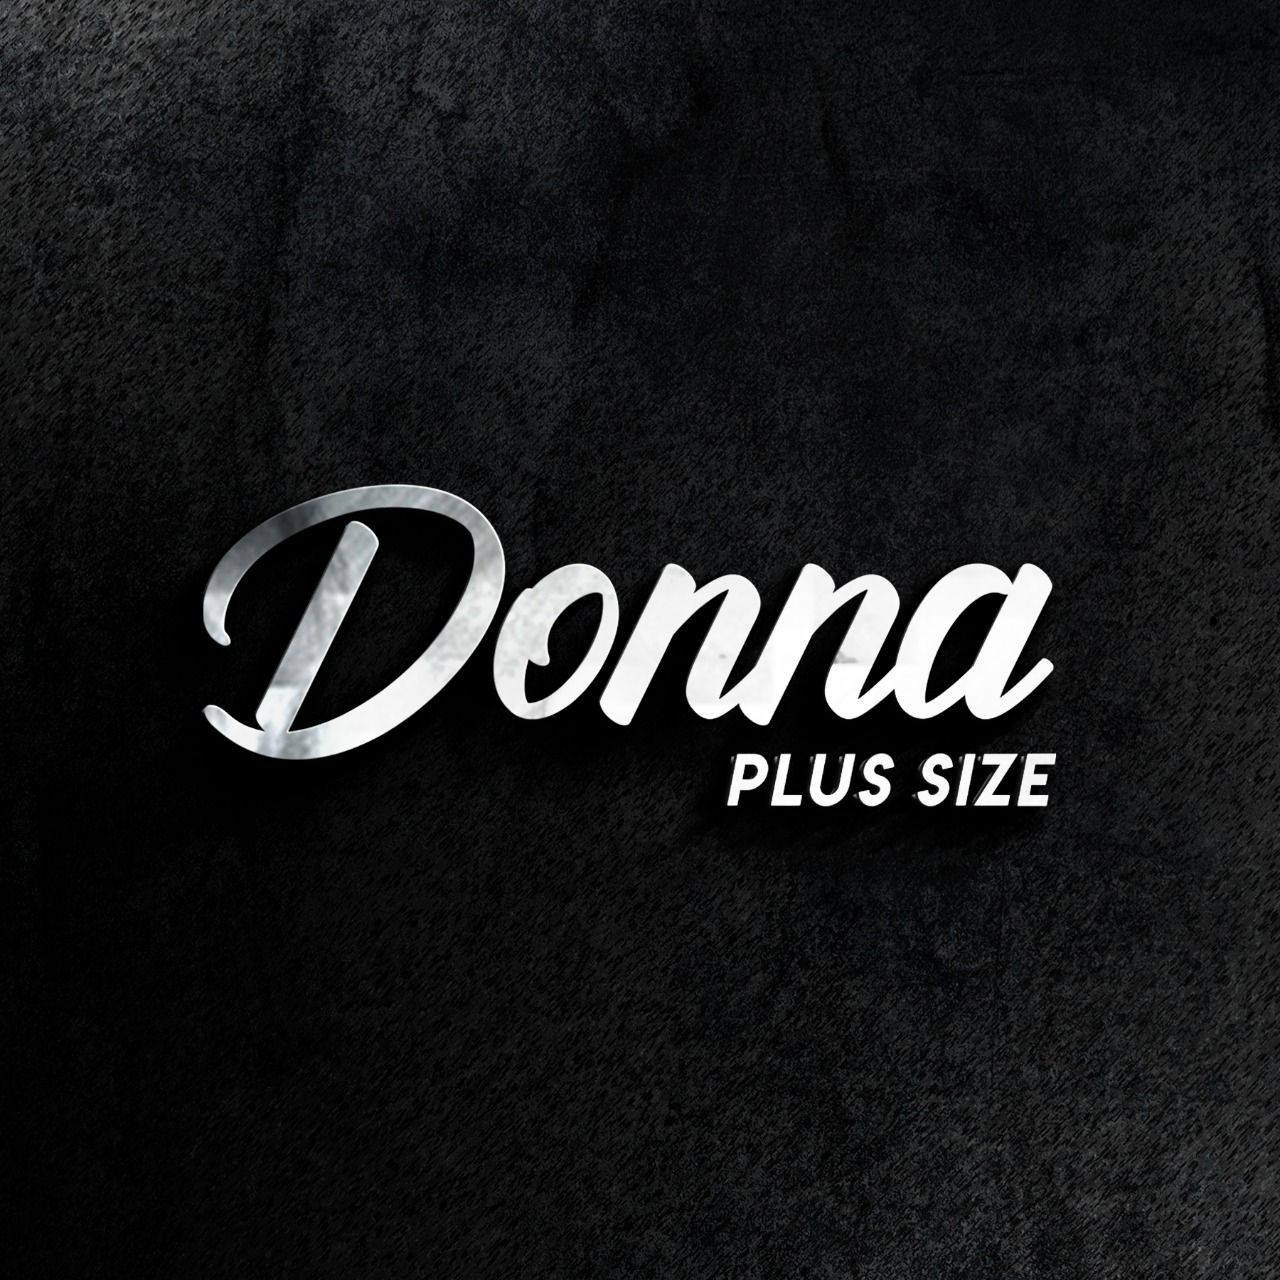 Donna Modas